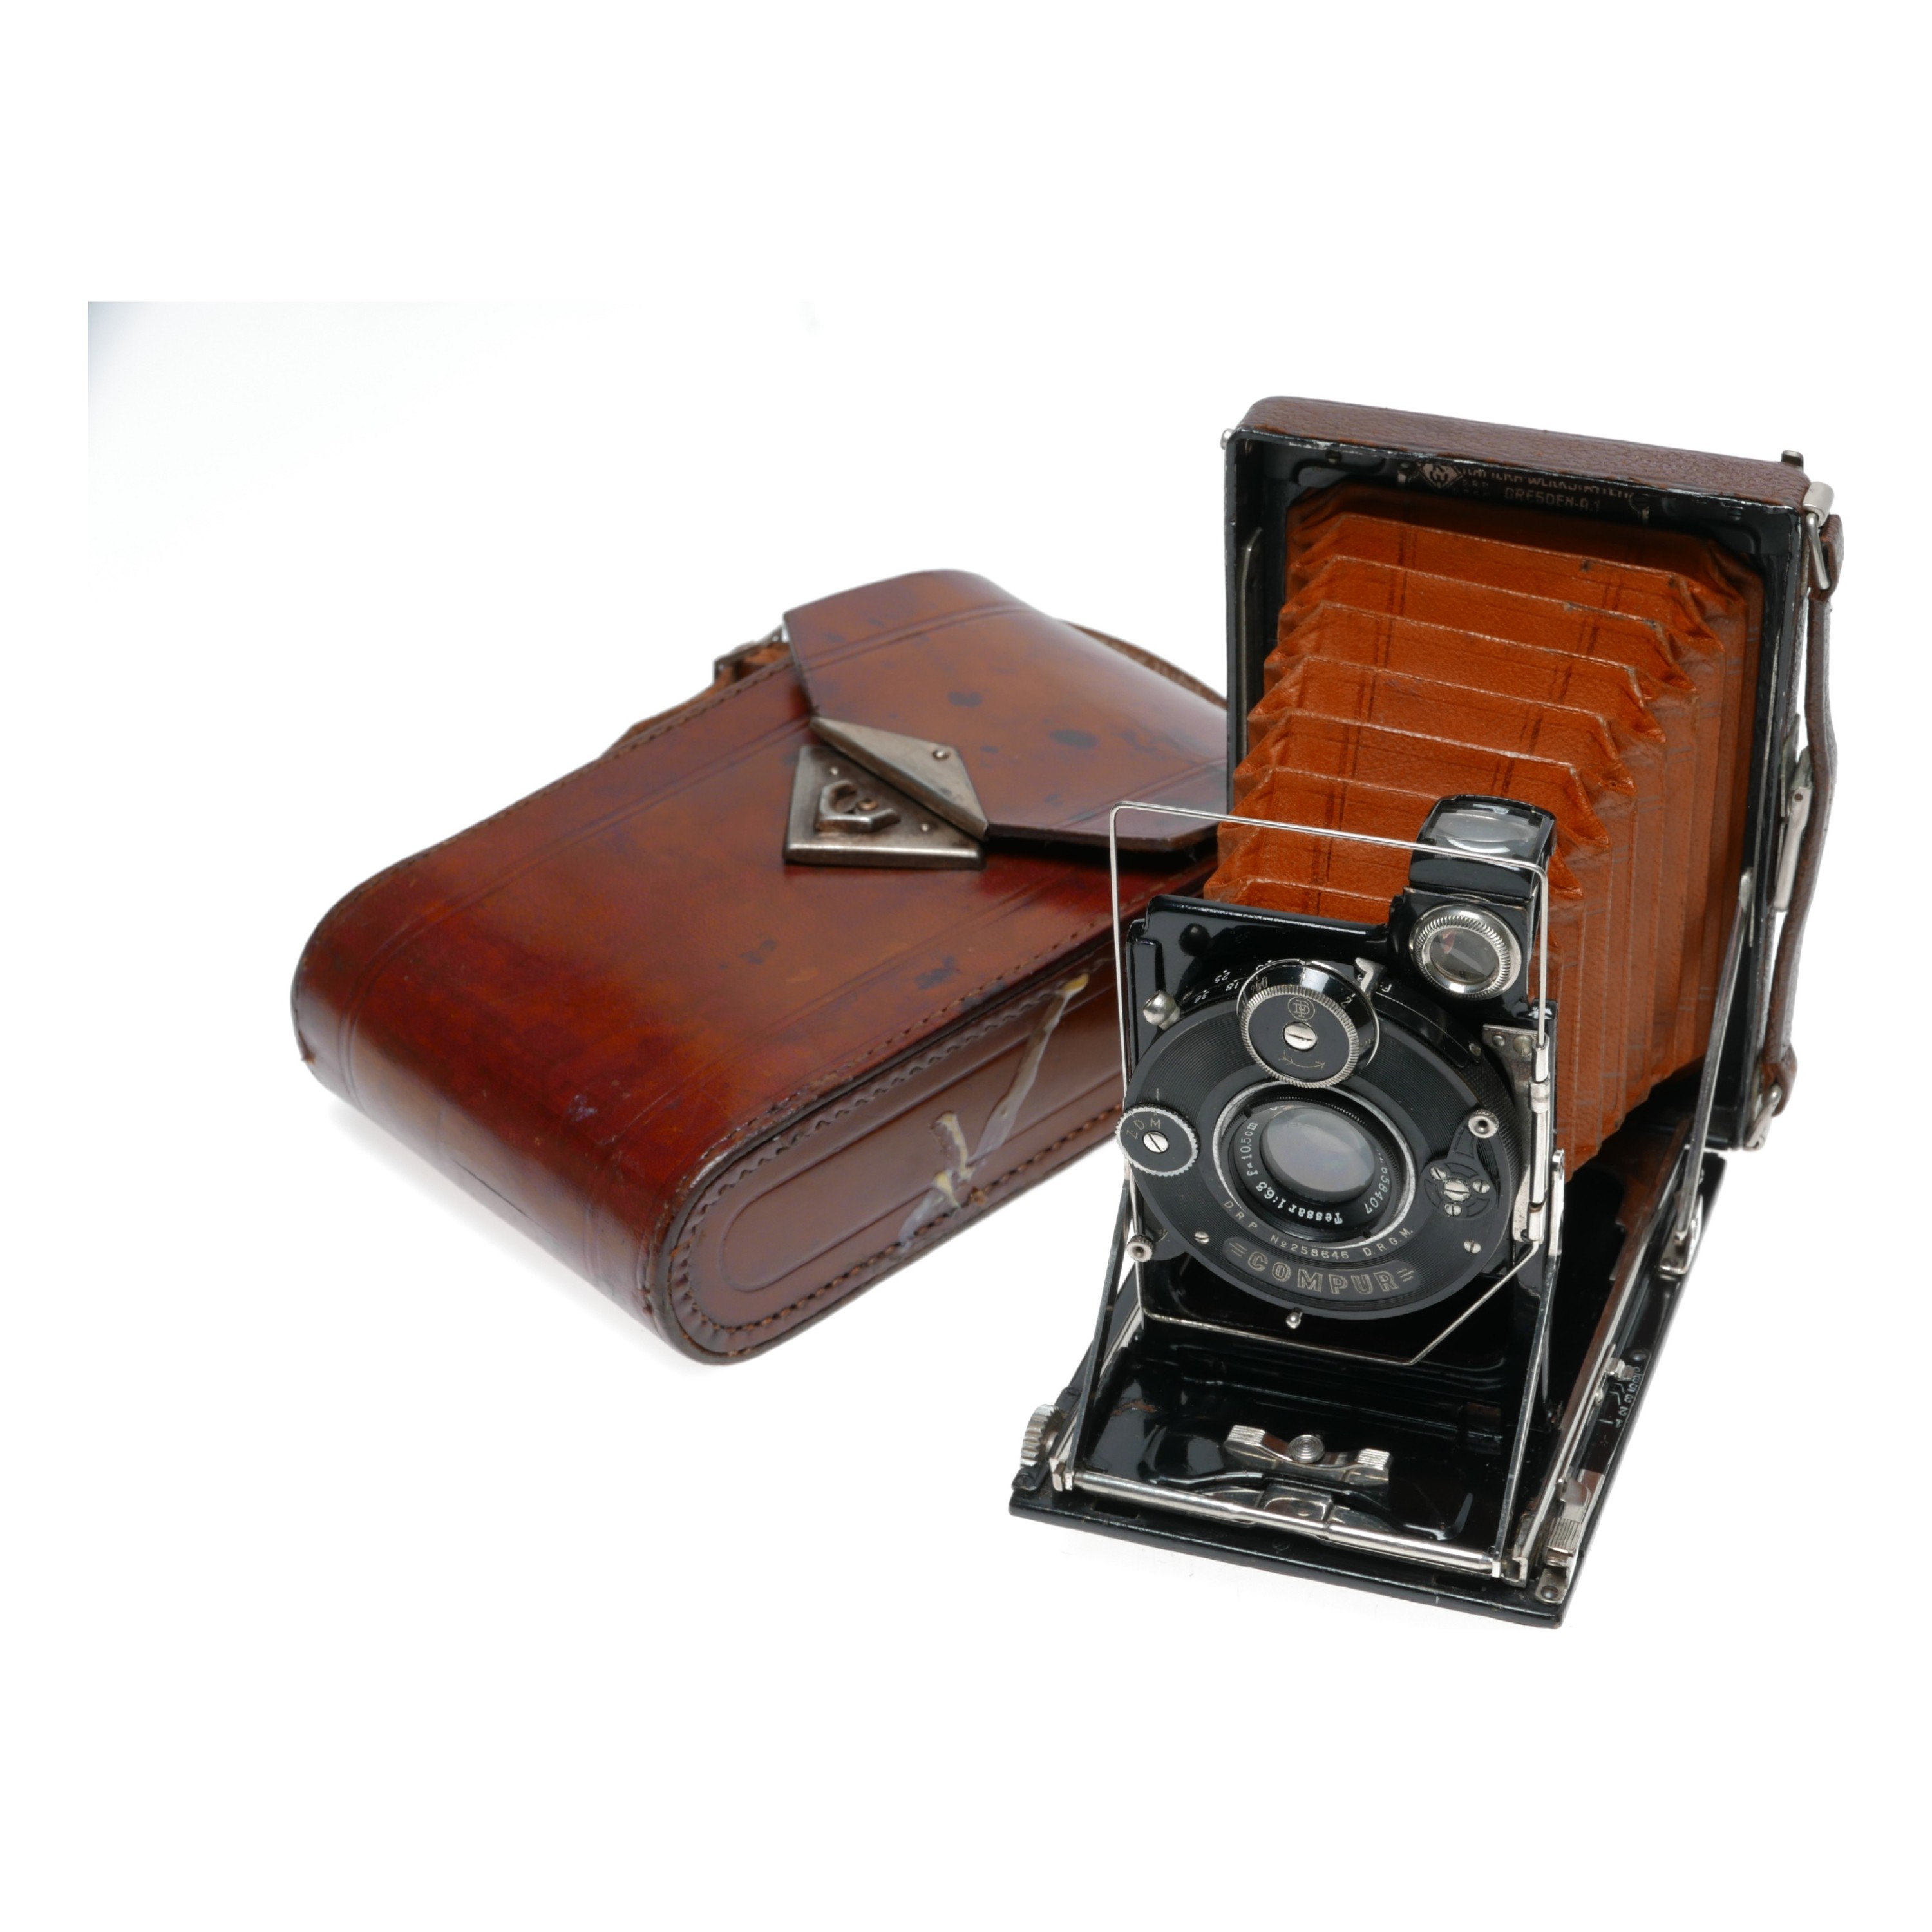 KW Patent Etui Luxus 6.5x9 Camera Carl Zeiss Tessar 1:6.3 fu003d10.5cm